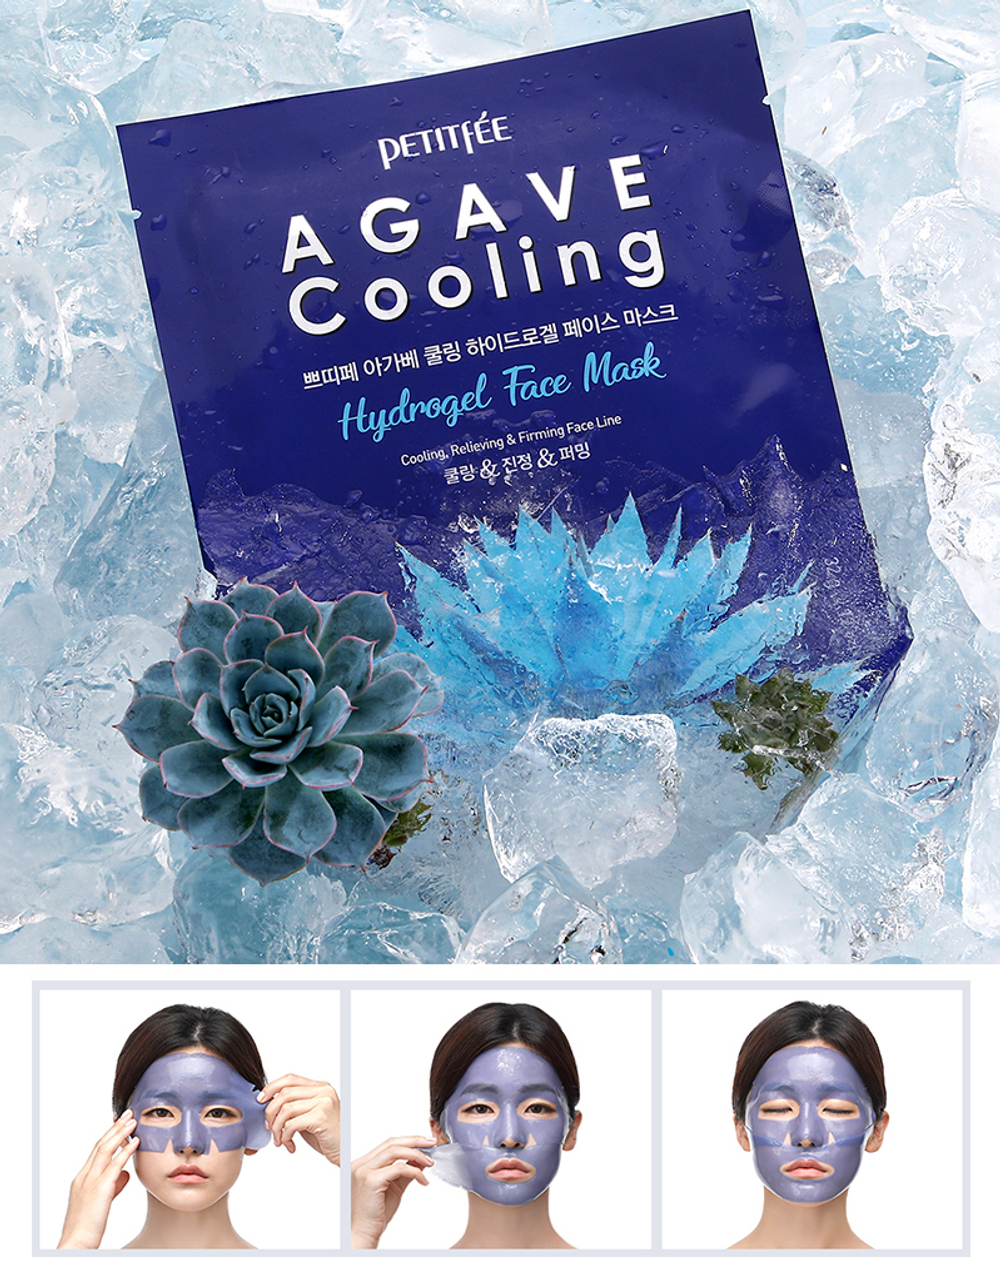 Petitfee Agave Cooling Hydrogel Face Mask охлаждающая гидрогелевая маска для лица с агавой